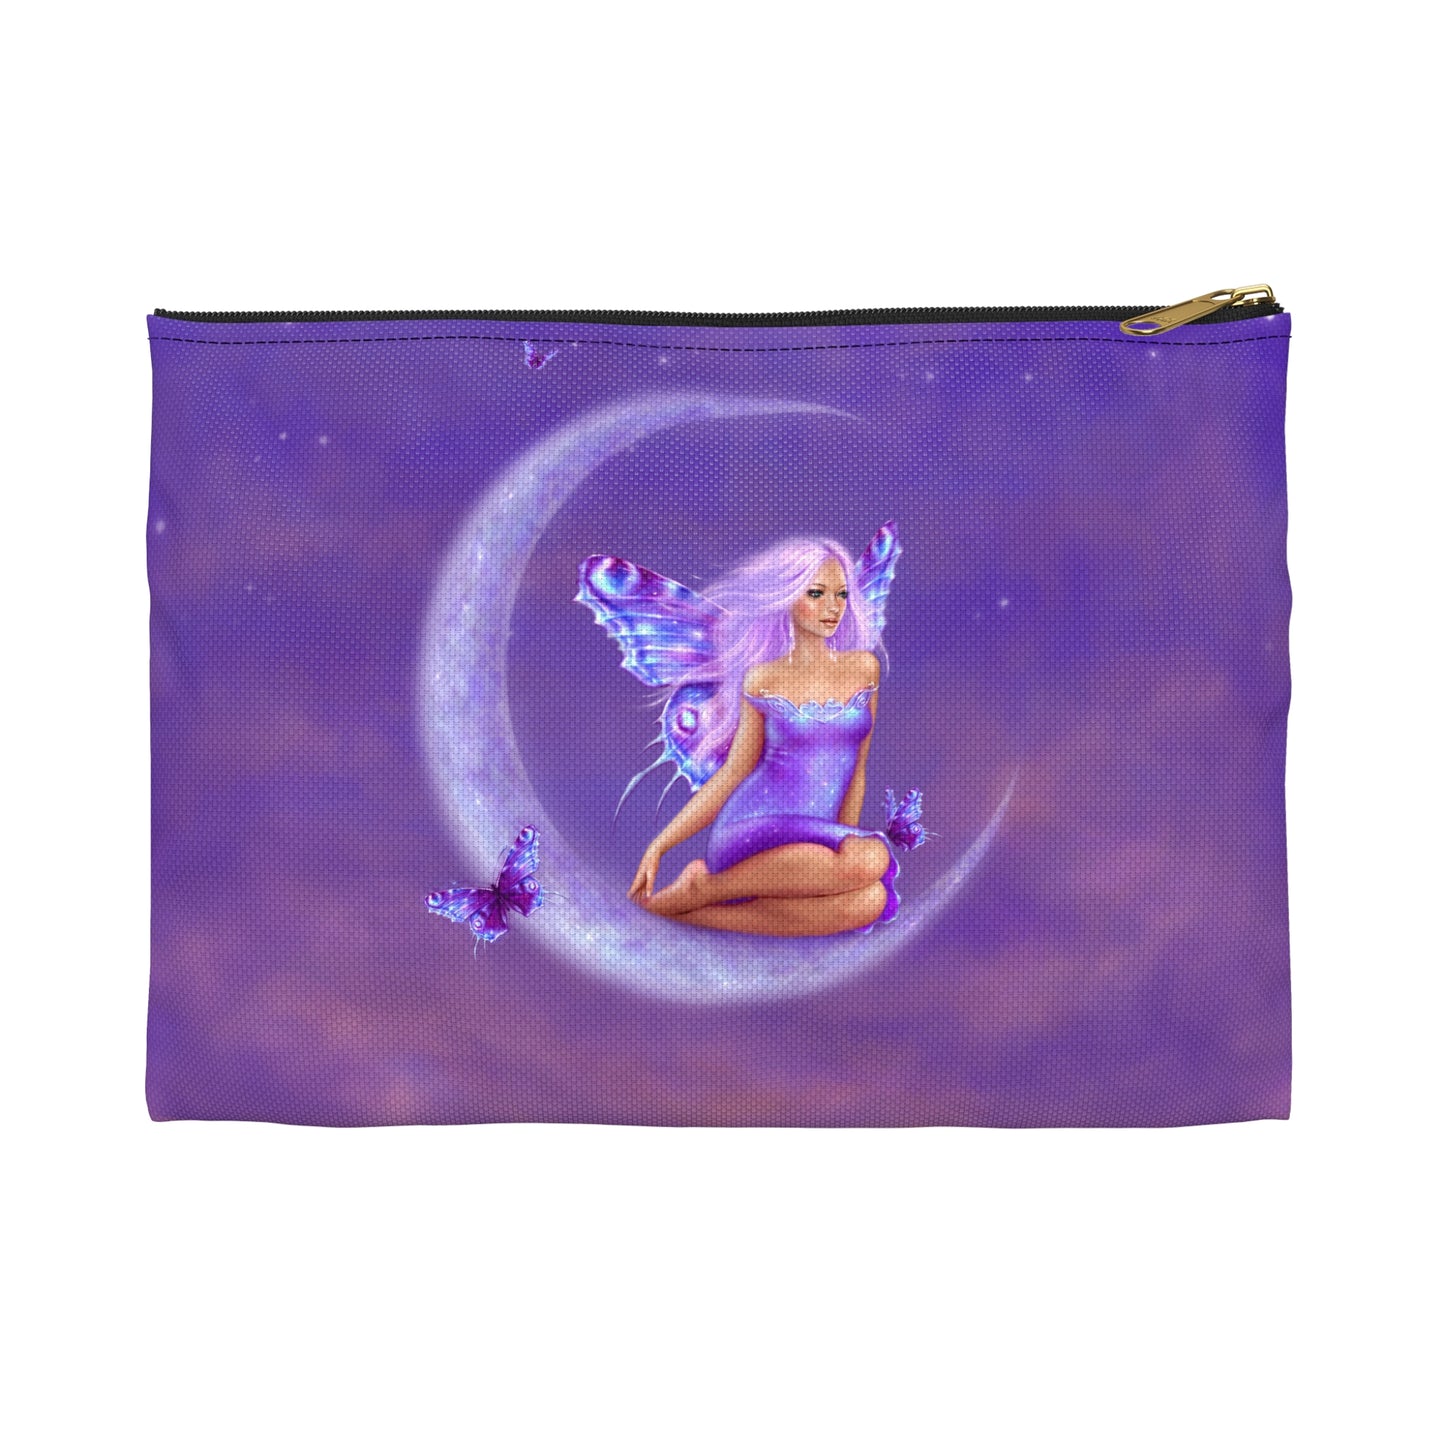 Accessory Bag - Lavender Moon